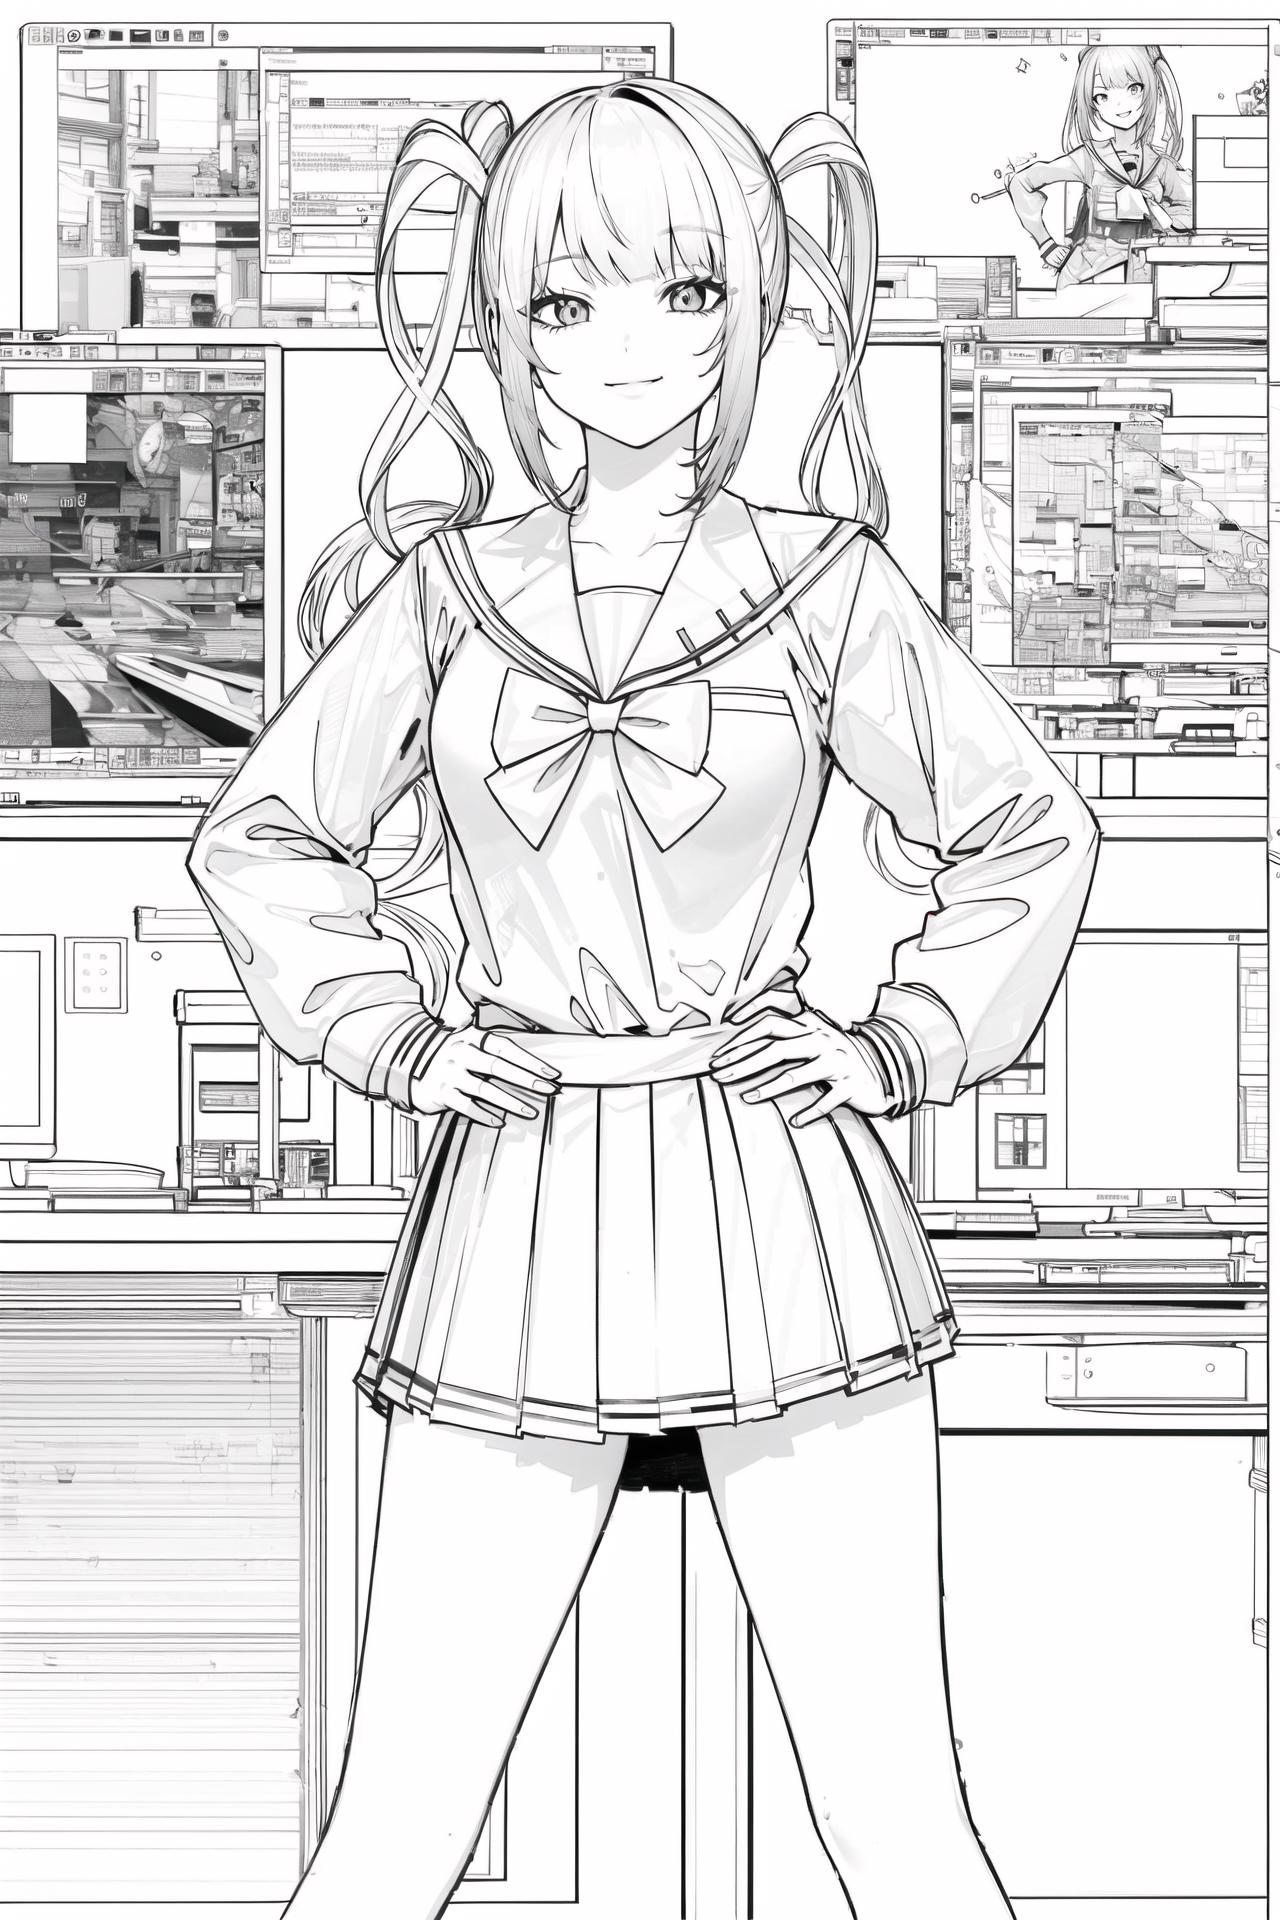 Anime Lineart / Manga-like (线稿/線画/マンガ風/漫画风) Style image by CyberAIchemist